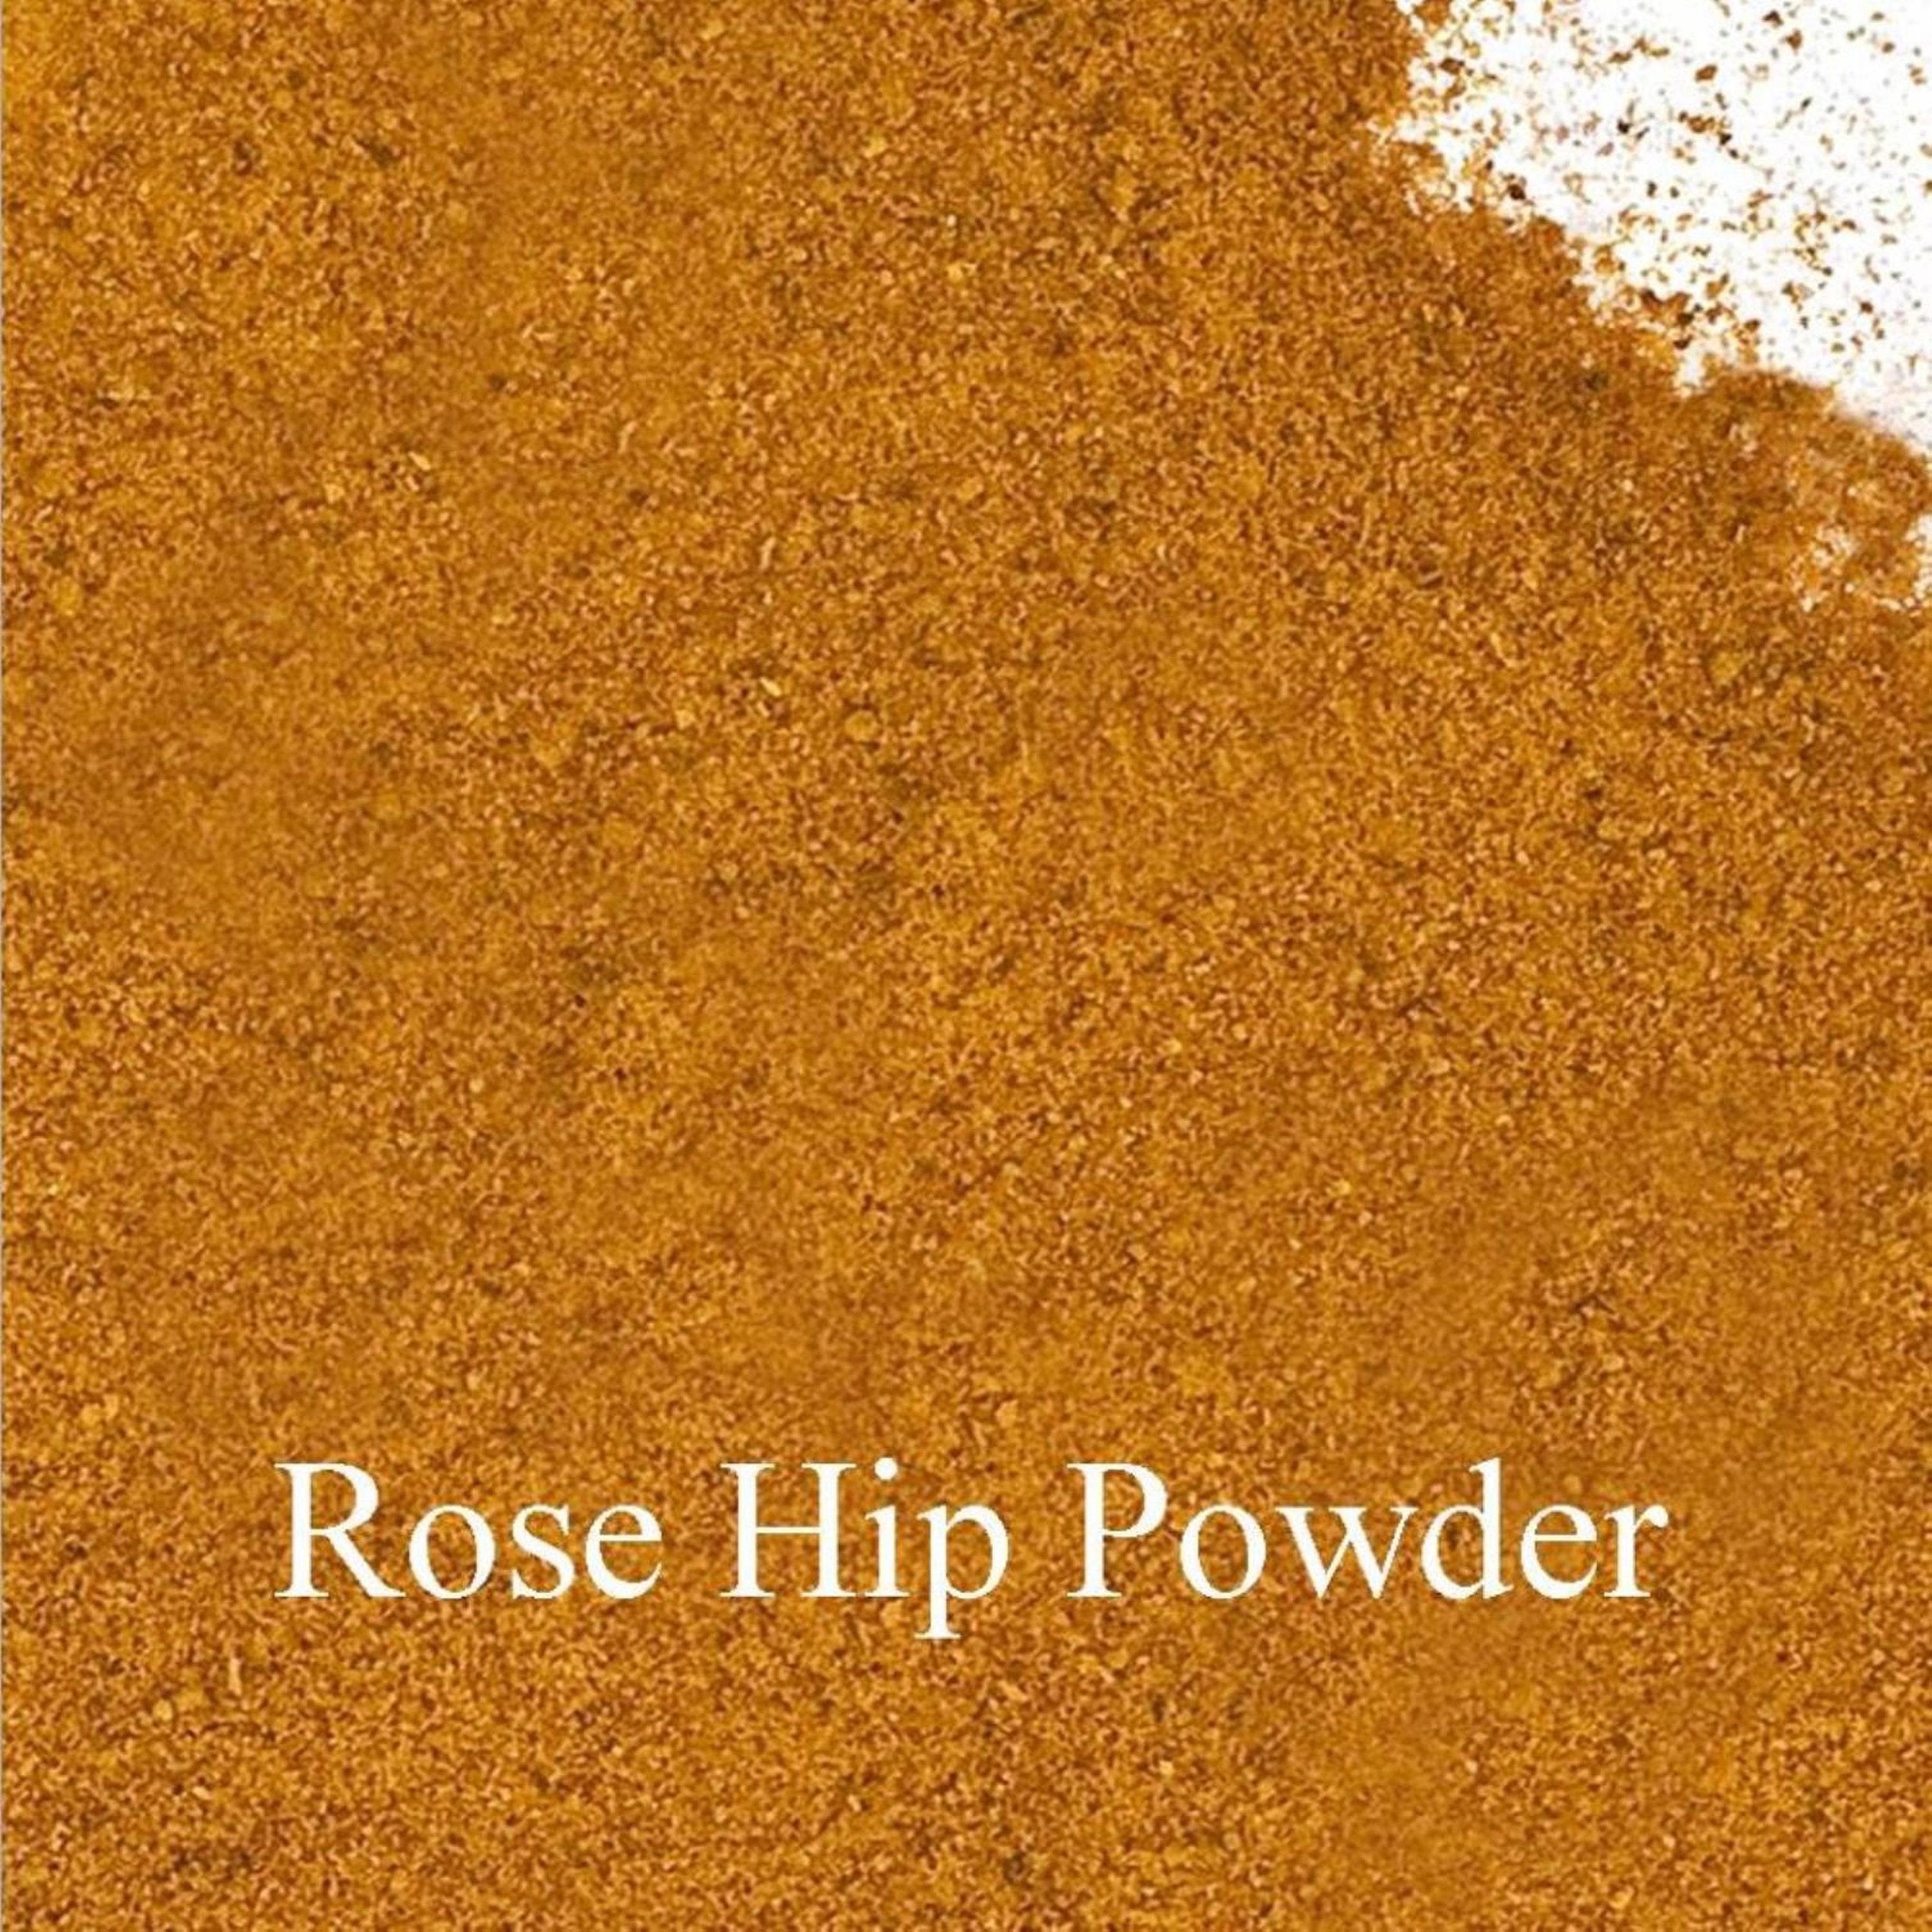  Alkanet Root Powder Soap Making Supplies Natural Colorant -  Finely Ground Dye Pigment Powder (4 oz) for Handmade Cosmetics, Henna,  Fabric, Wood & More DIY Splendor Santa Barbara